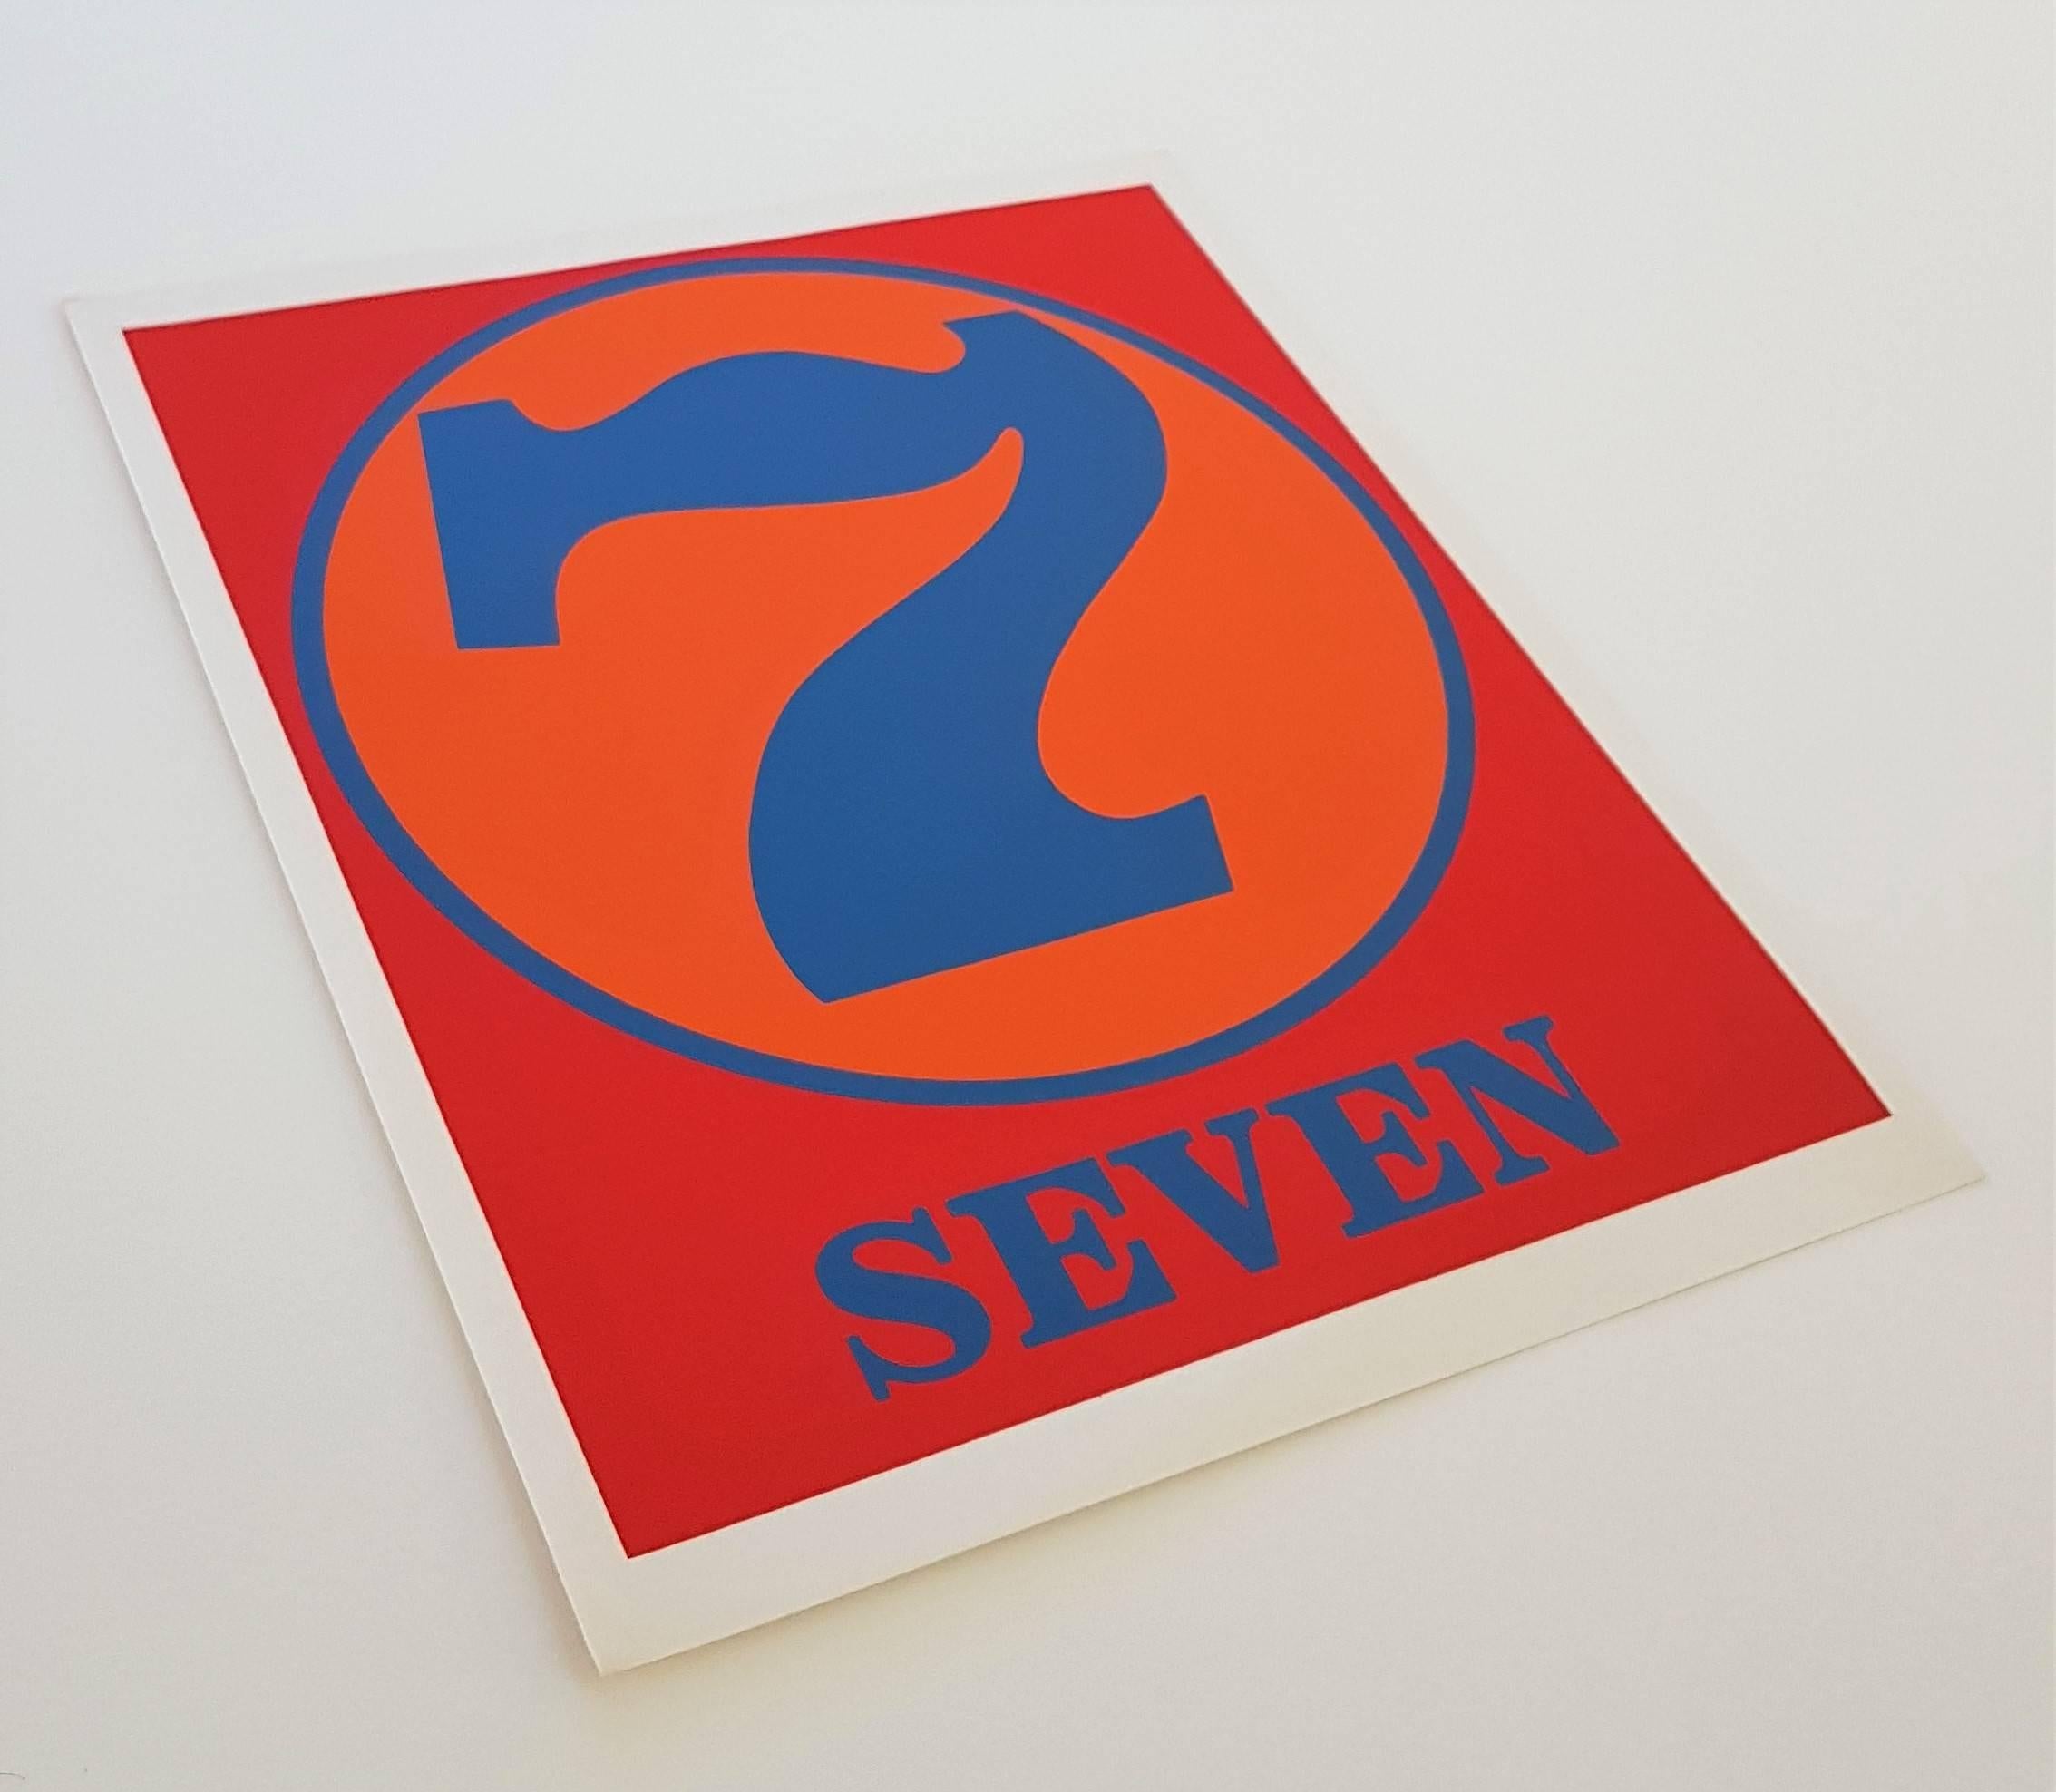 Number Suite - Seven - Pop Art Print by Robert Indiana